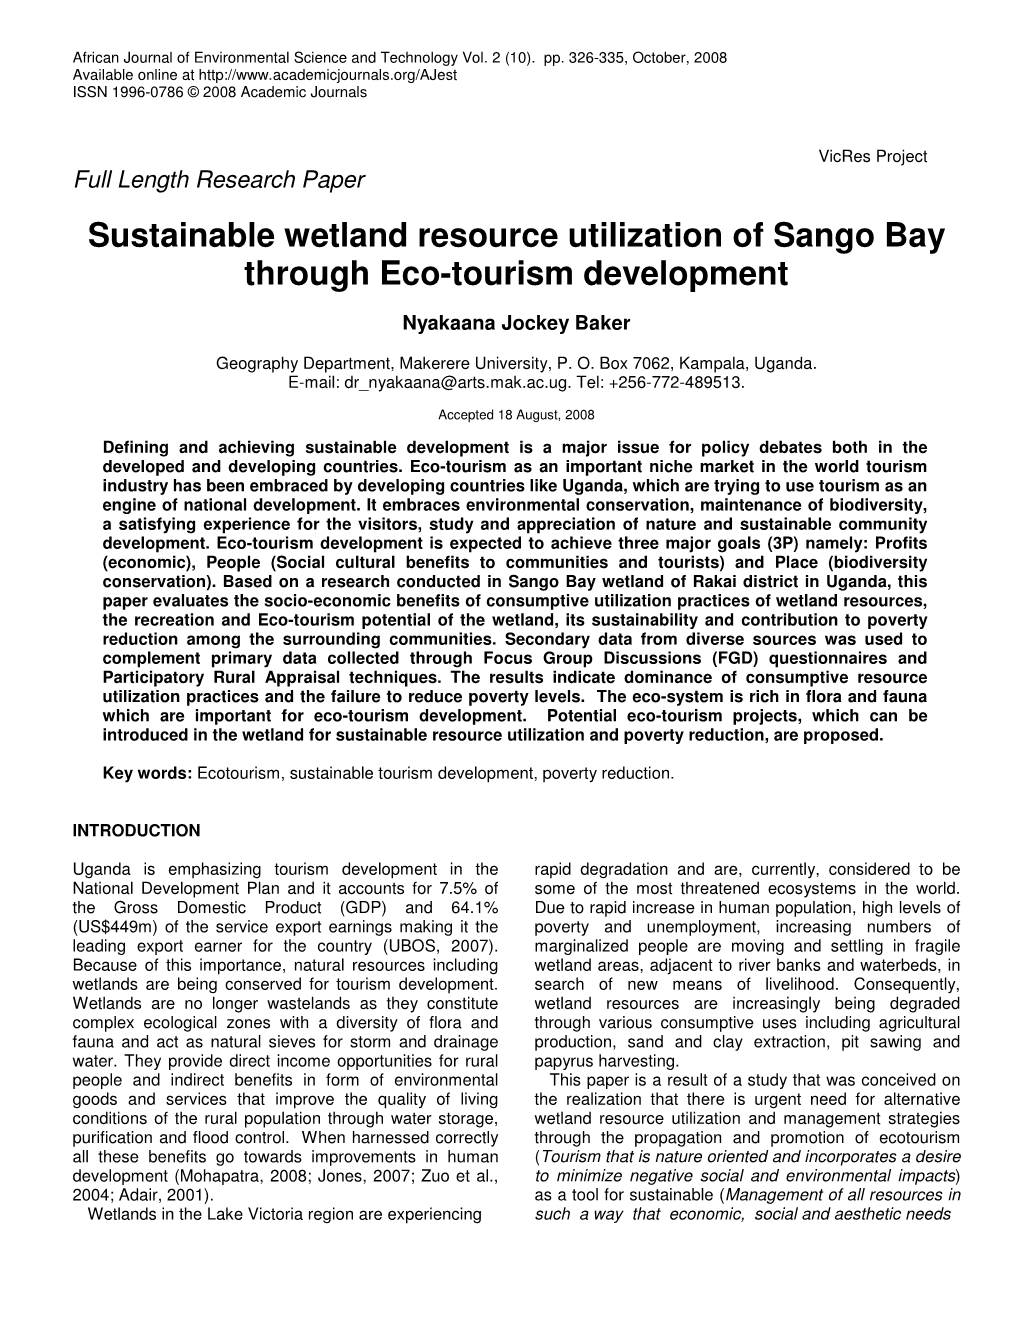 Sustainable Wetland Resource Utilization of Sango Bay Through Eco-Tourism Development